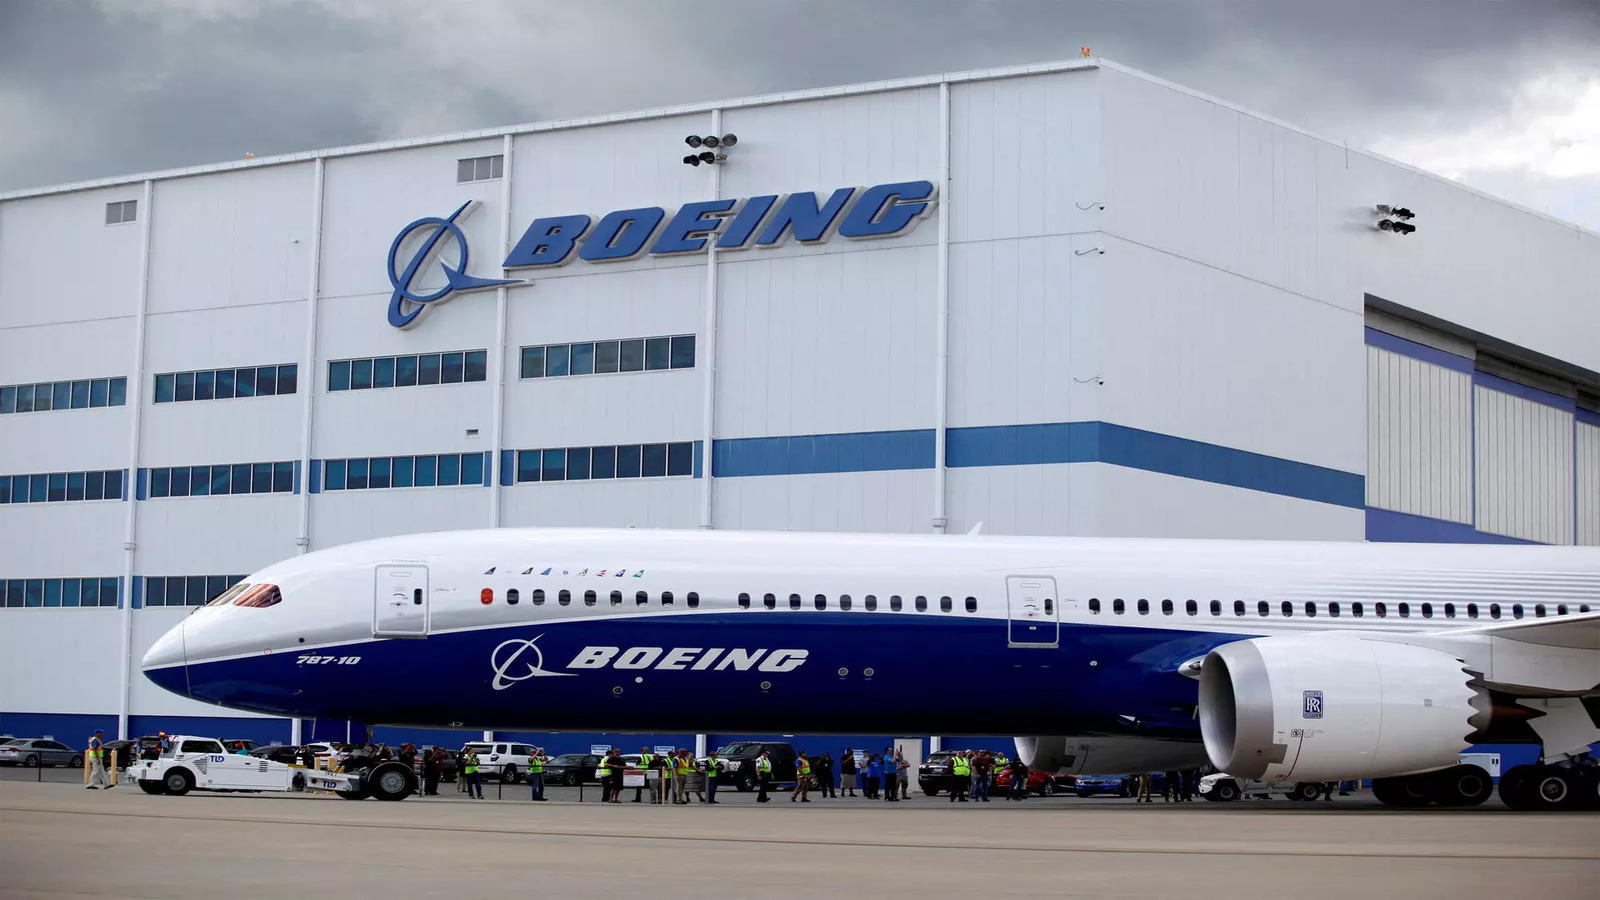 H Boeing επενδύει 1,2 δις δολάρια ετησίως στο πρόγραμμα “Make in India”